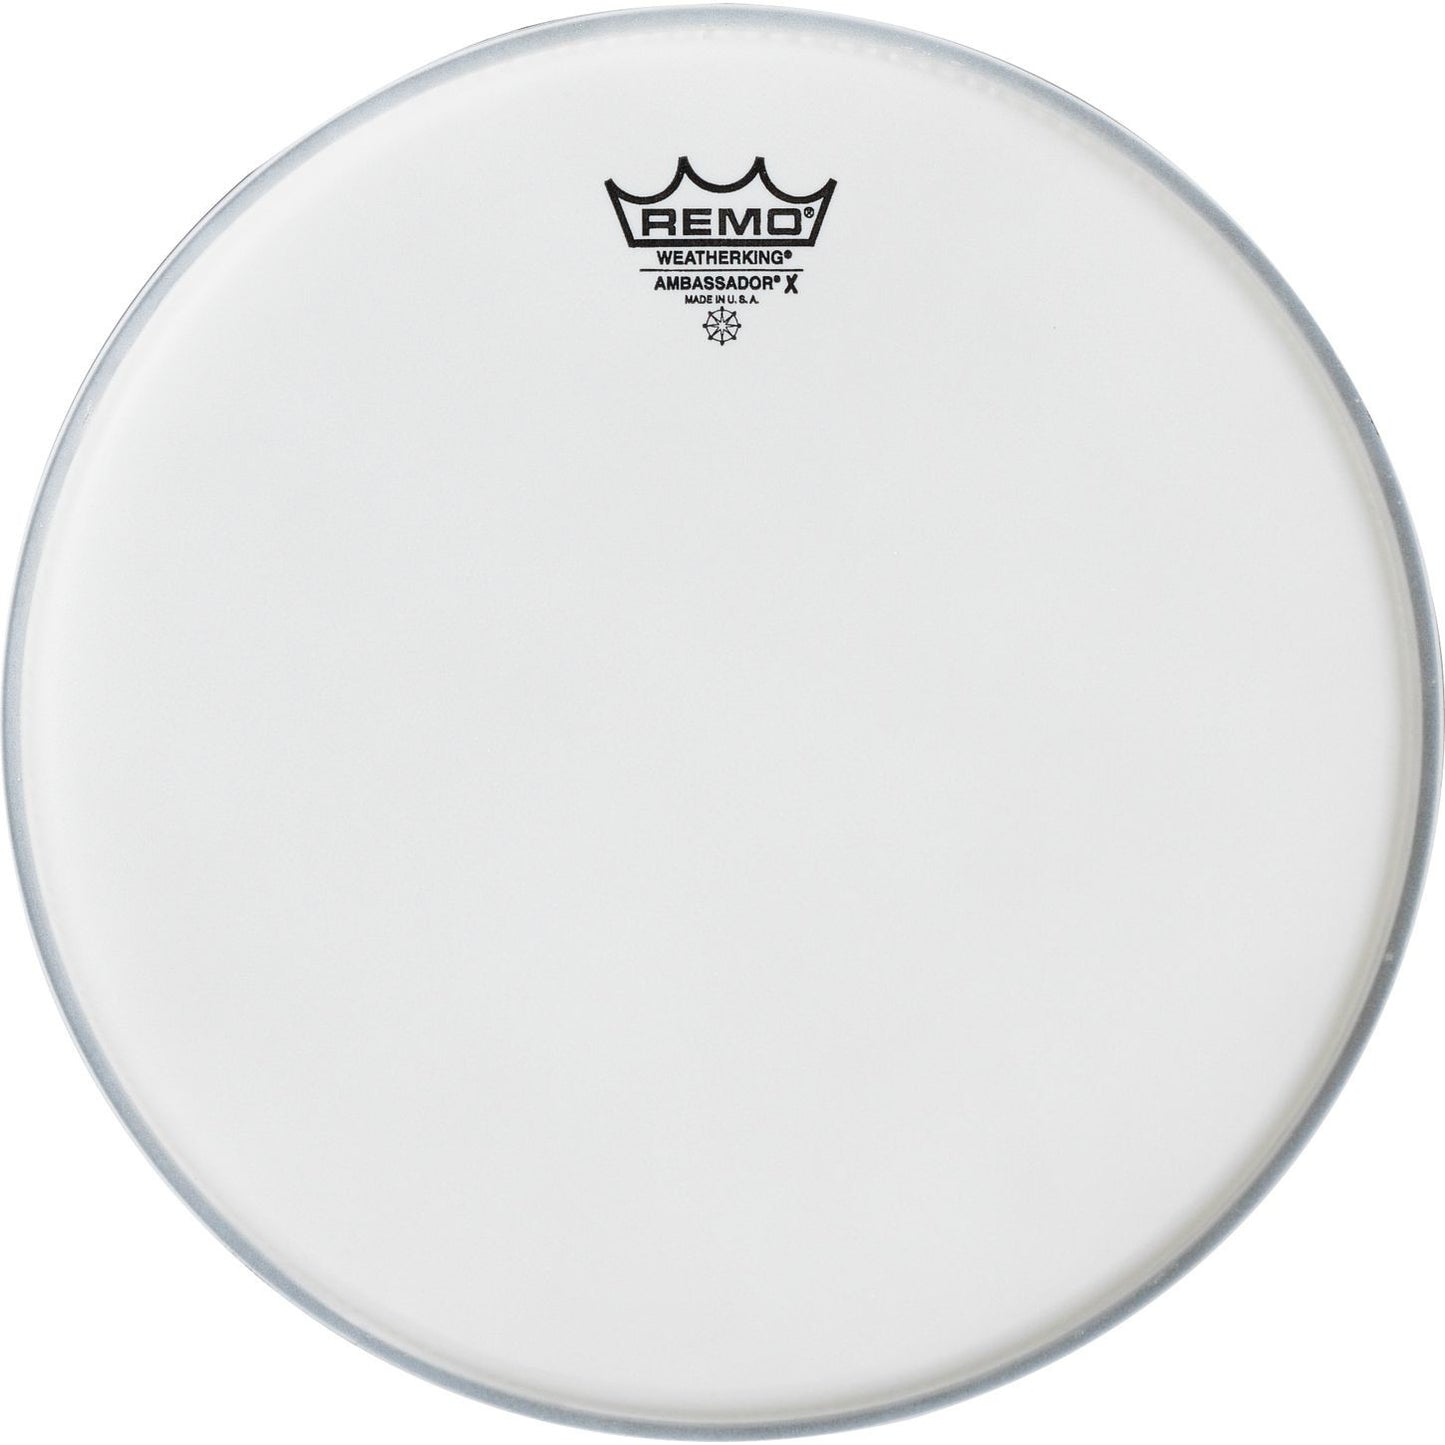 REMO | Ambassador 14" inch Coated Drum Head | Drum Skin | BA-0114-00